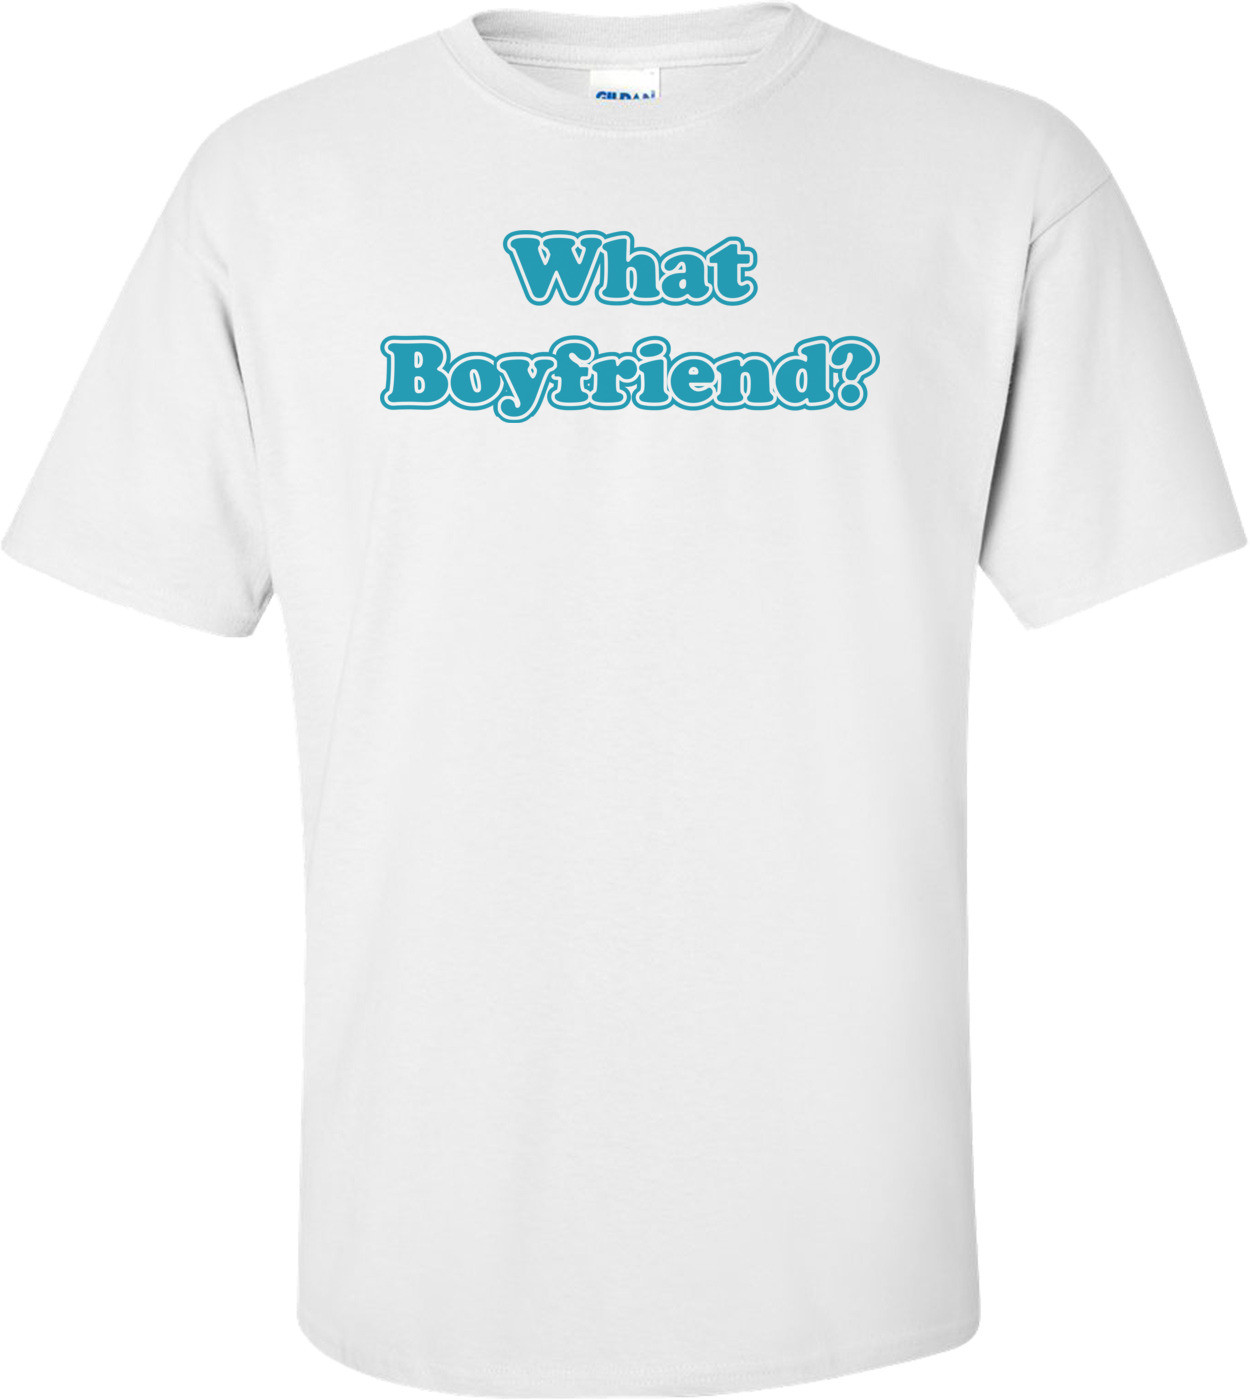 What Boyfriend? T-shirt